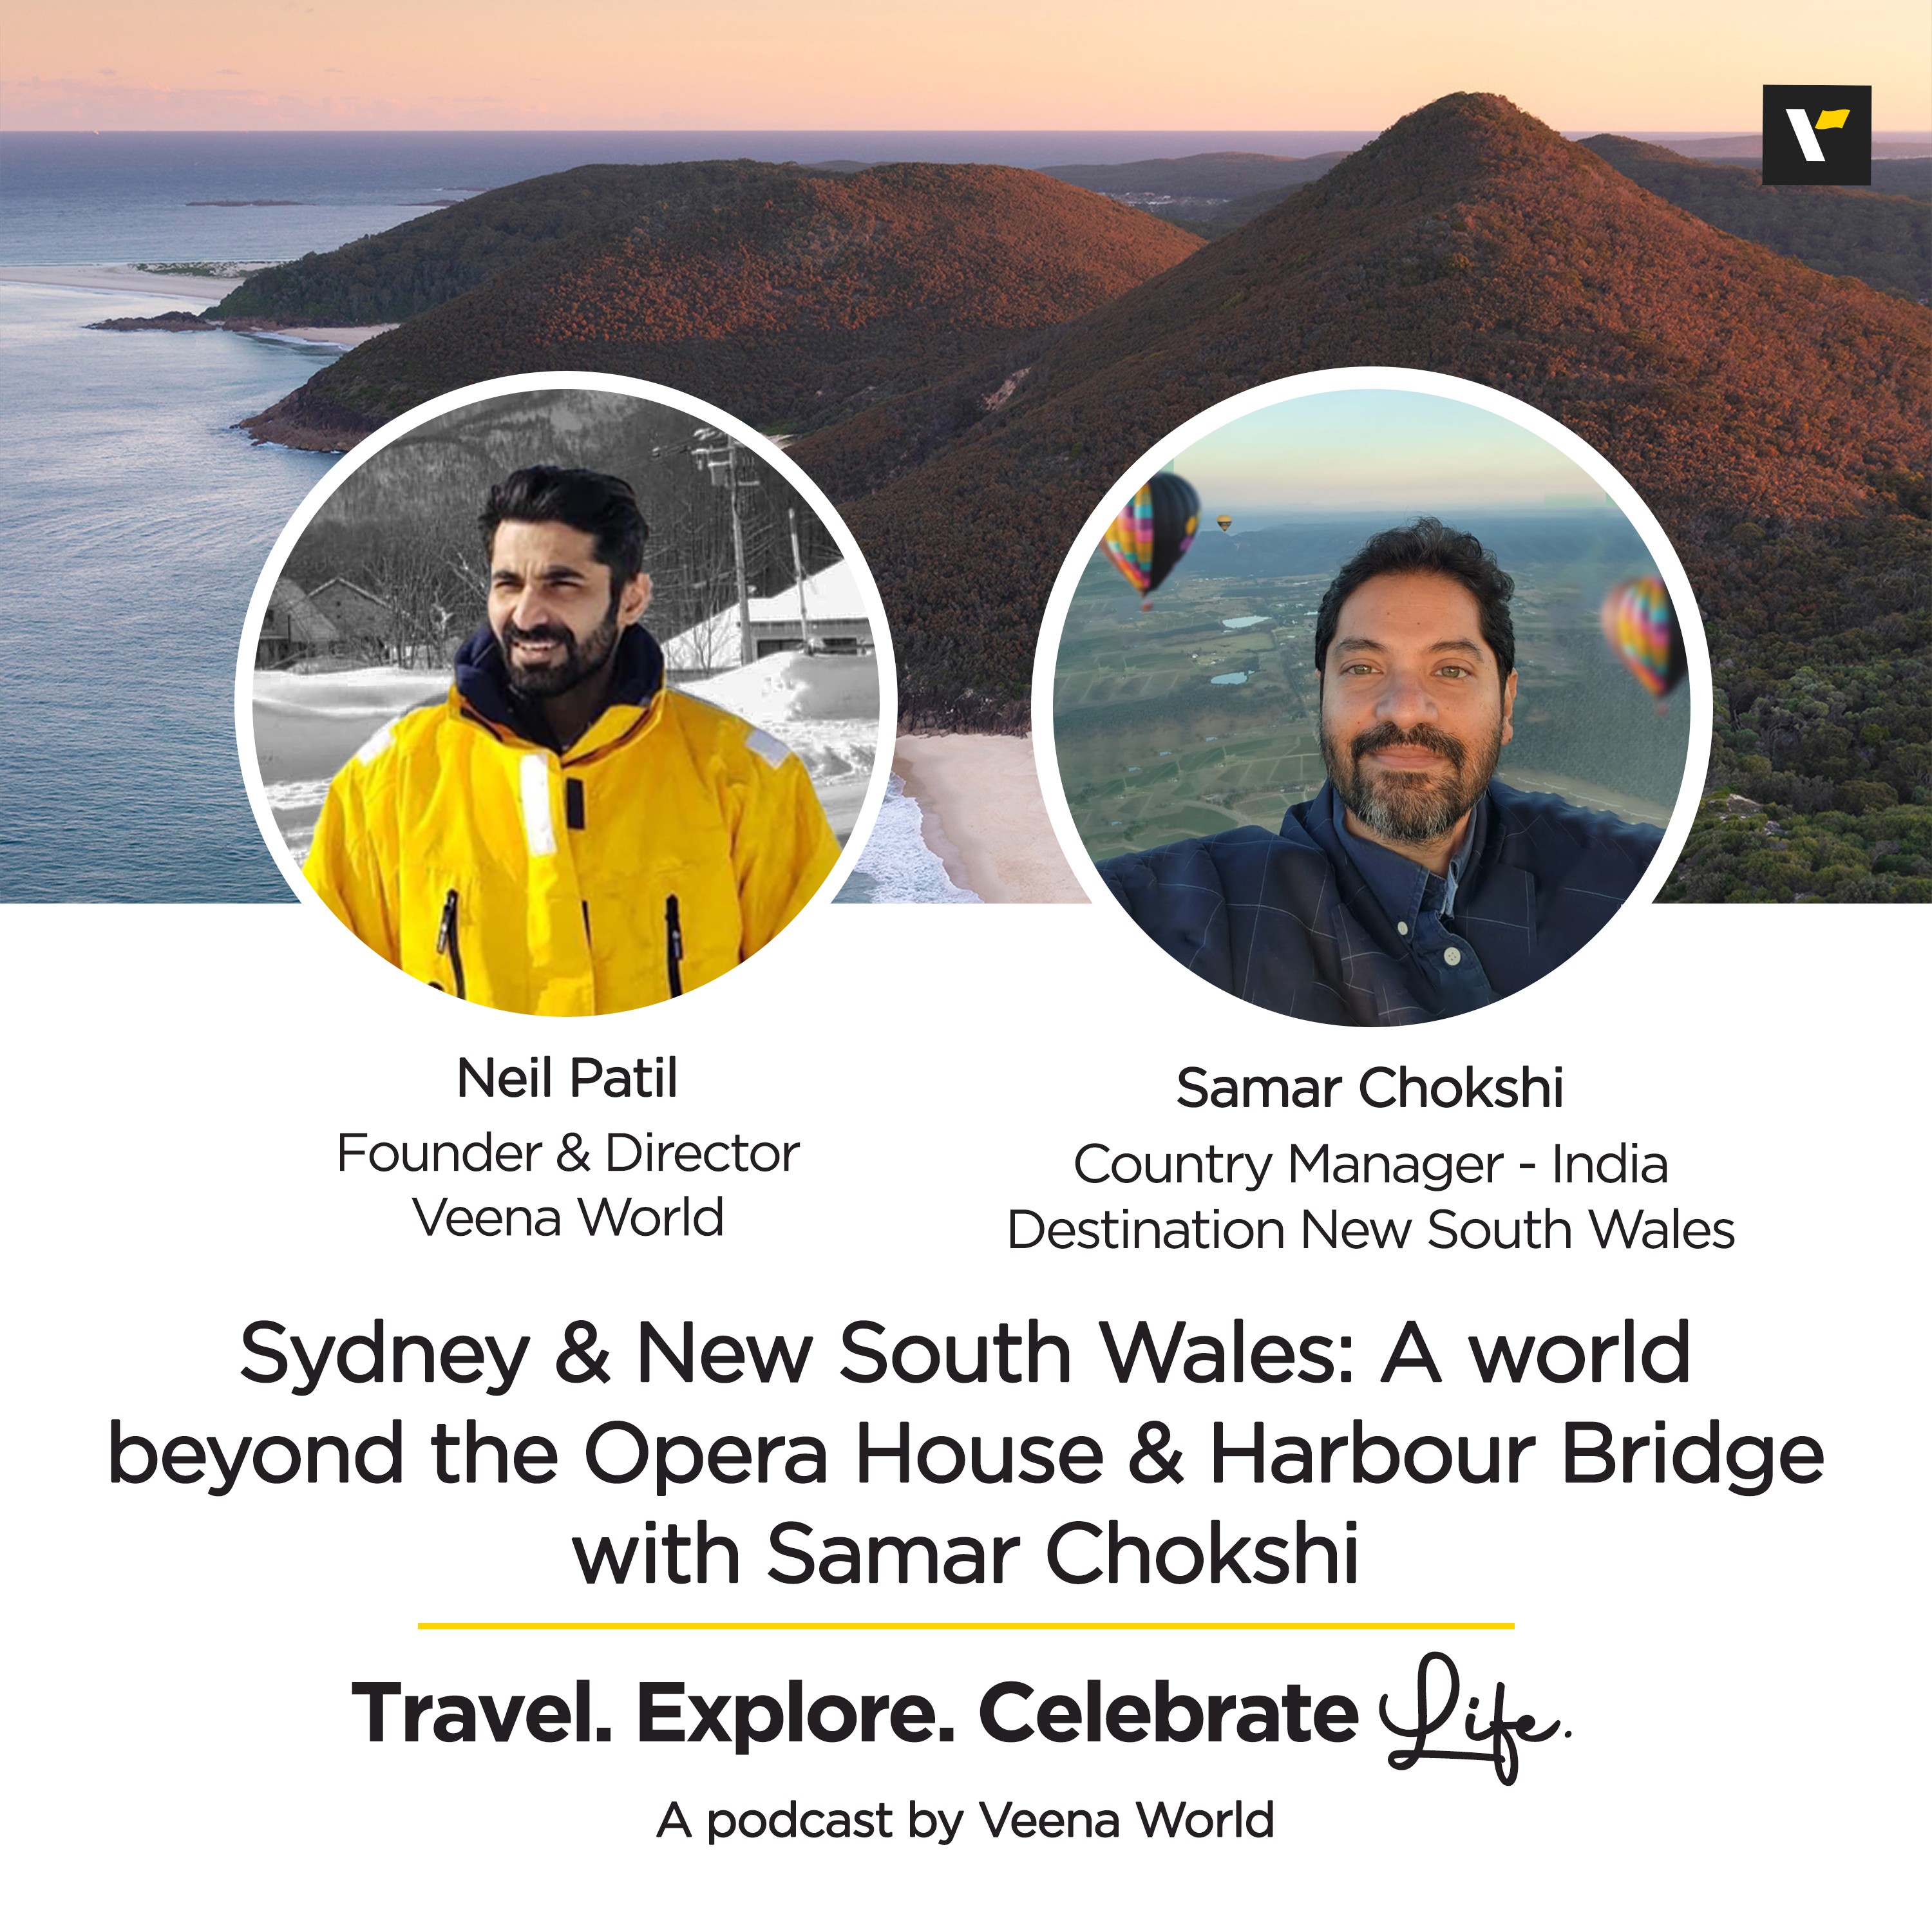 Sydney & New South Wales: A world beyond the Opera House & Harbour Bridge with Samar Chokshi